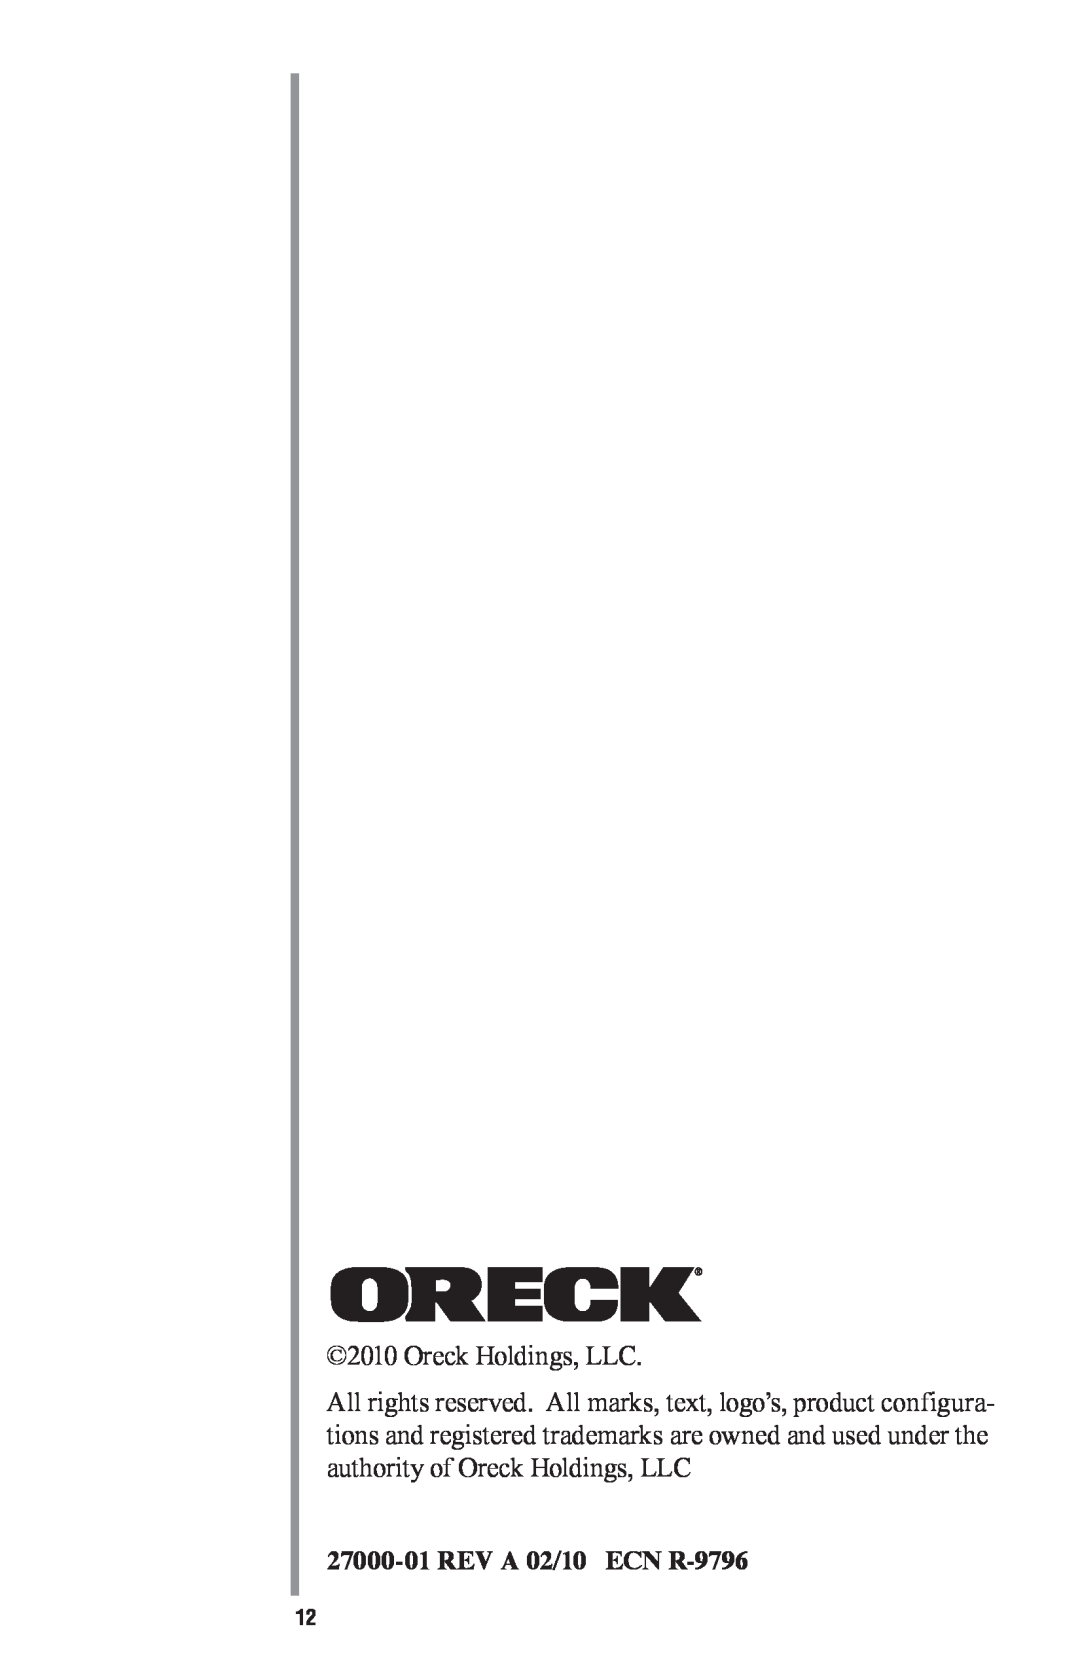 Oreck CC1000 manual 27000-01REV A 02/10 ECN R-9796, Oreck Holdings, LLC 